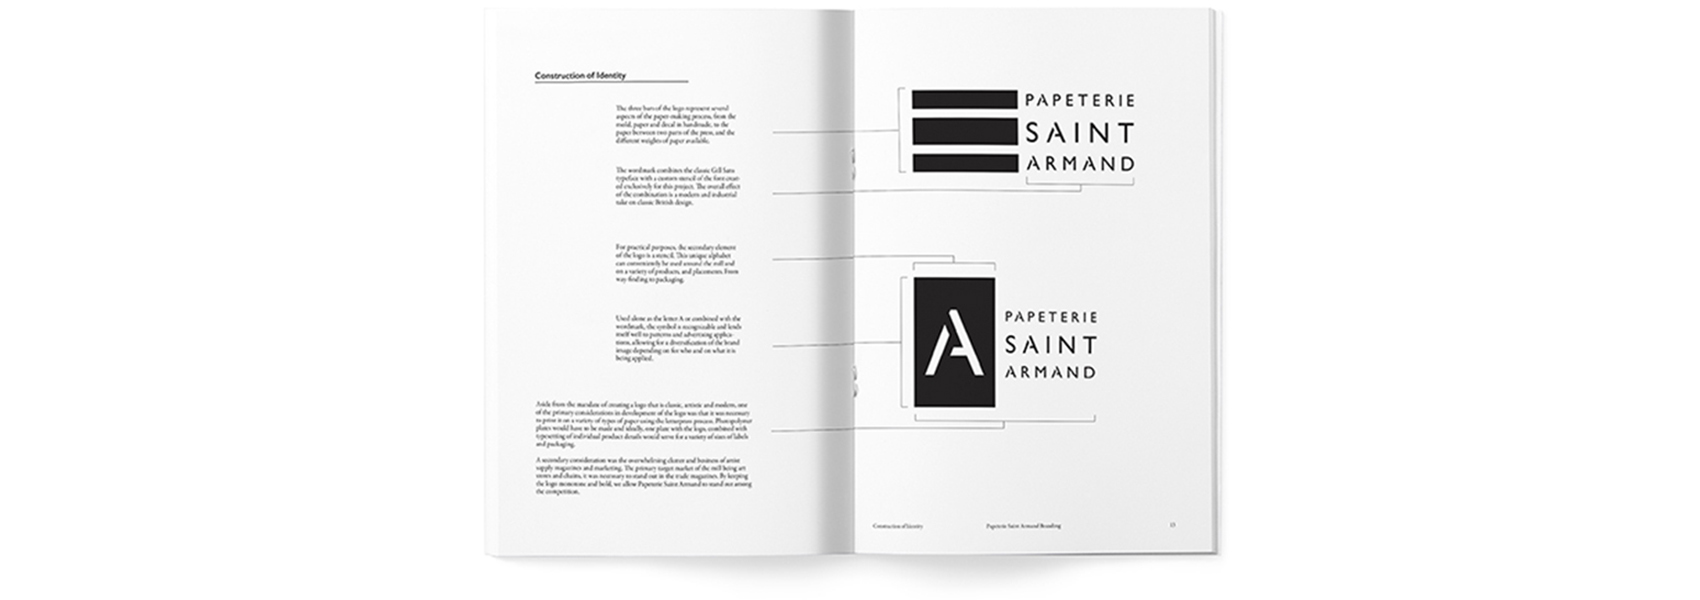 Image of Papeterie Saint Armand Branding